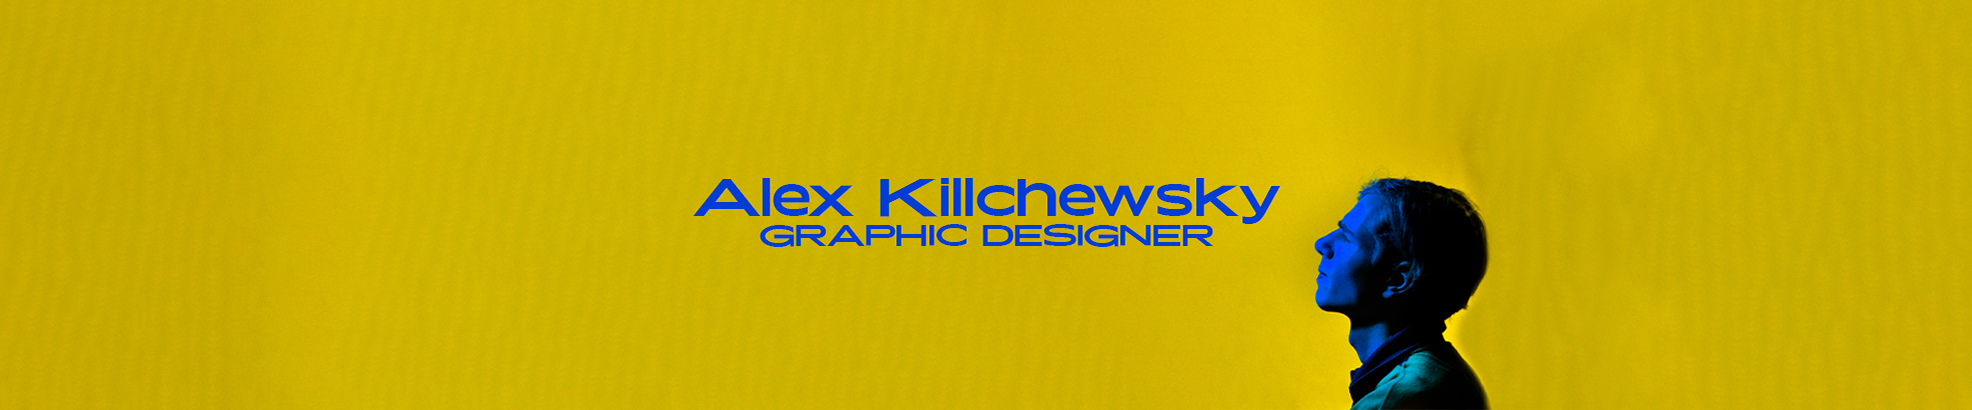 Alex Killchewsky's profile banner